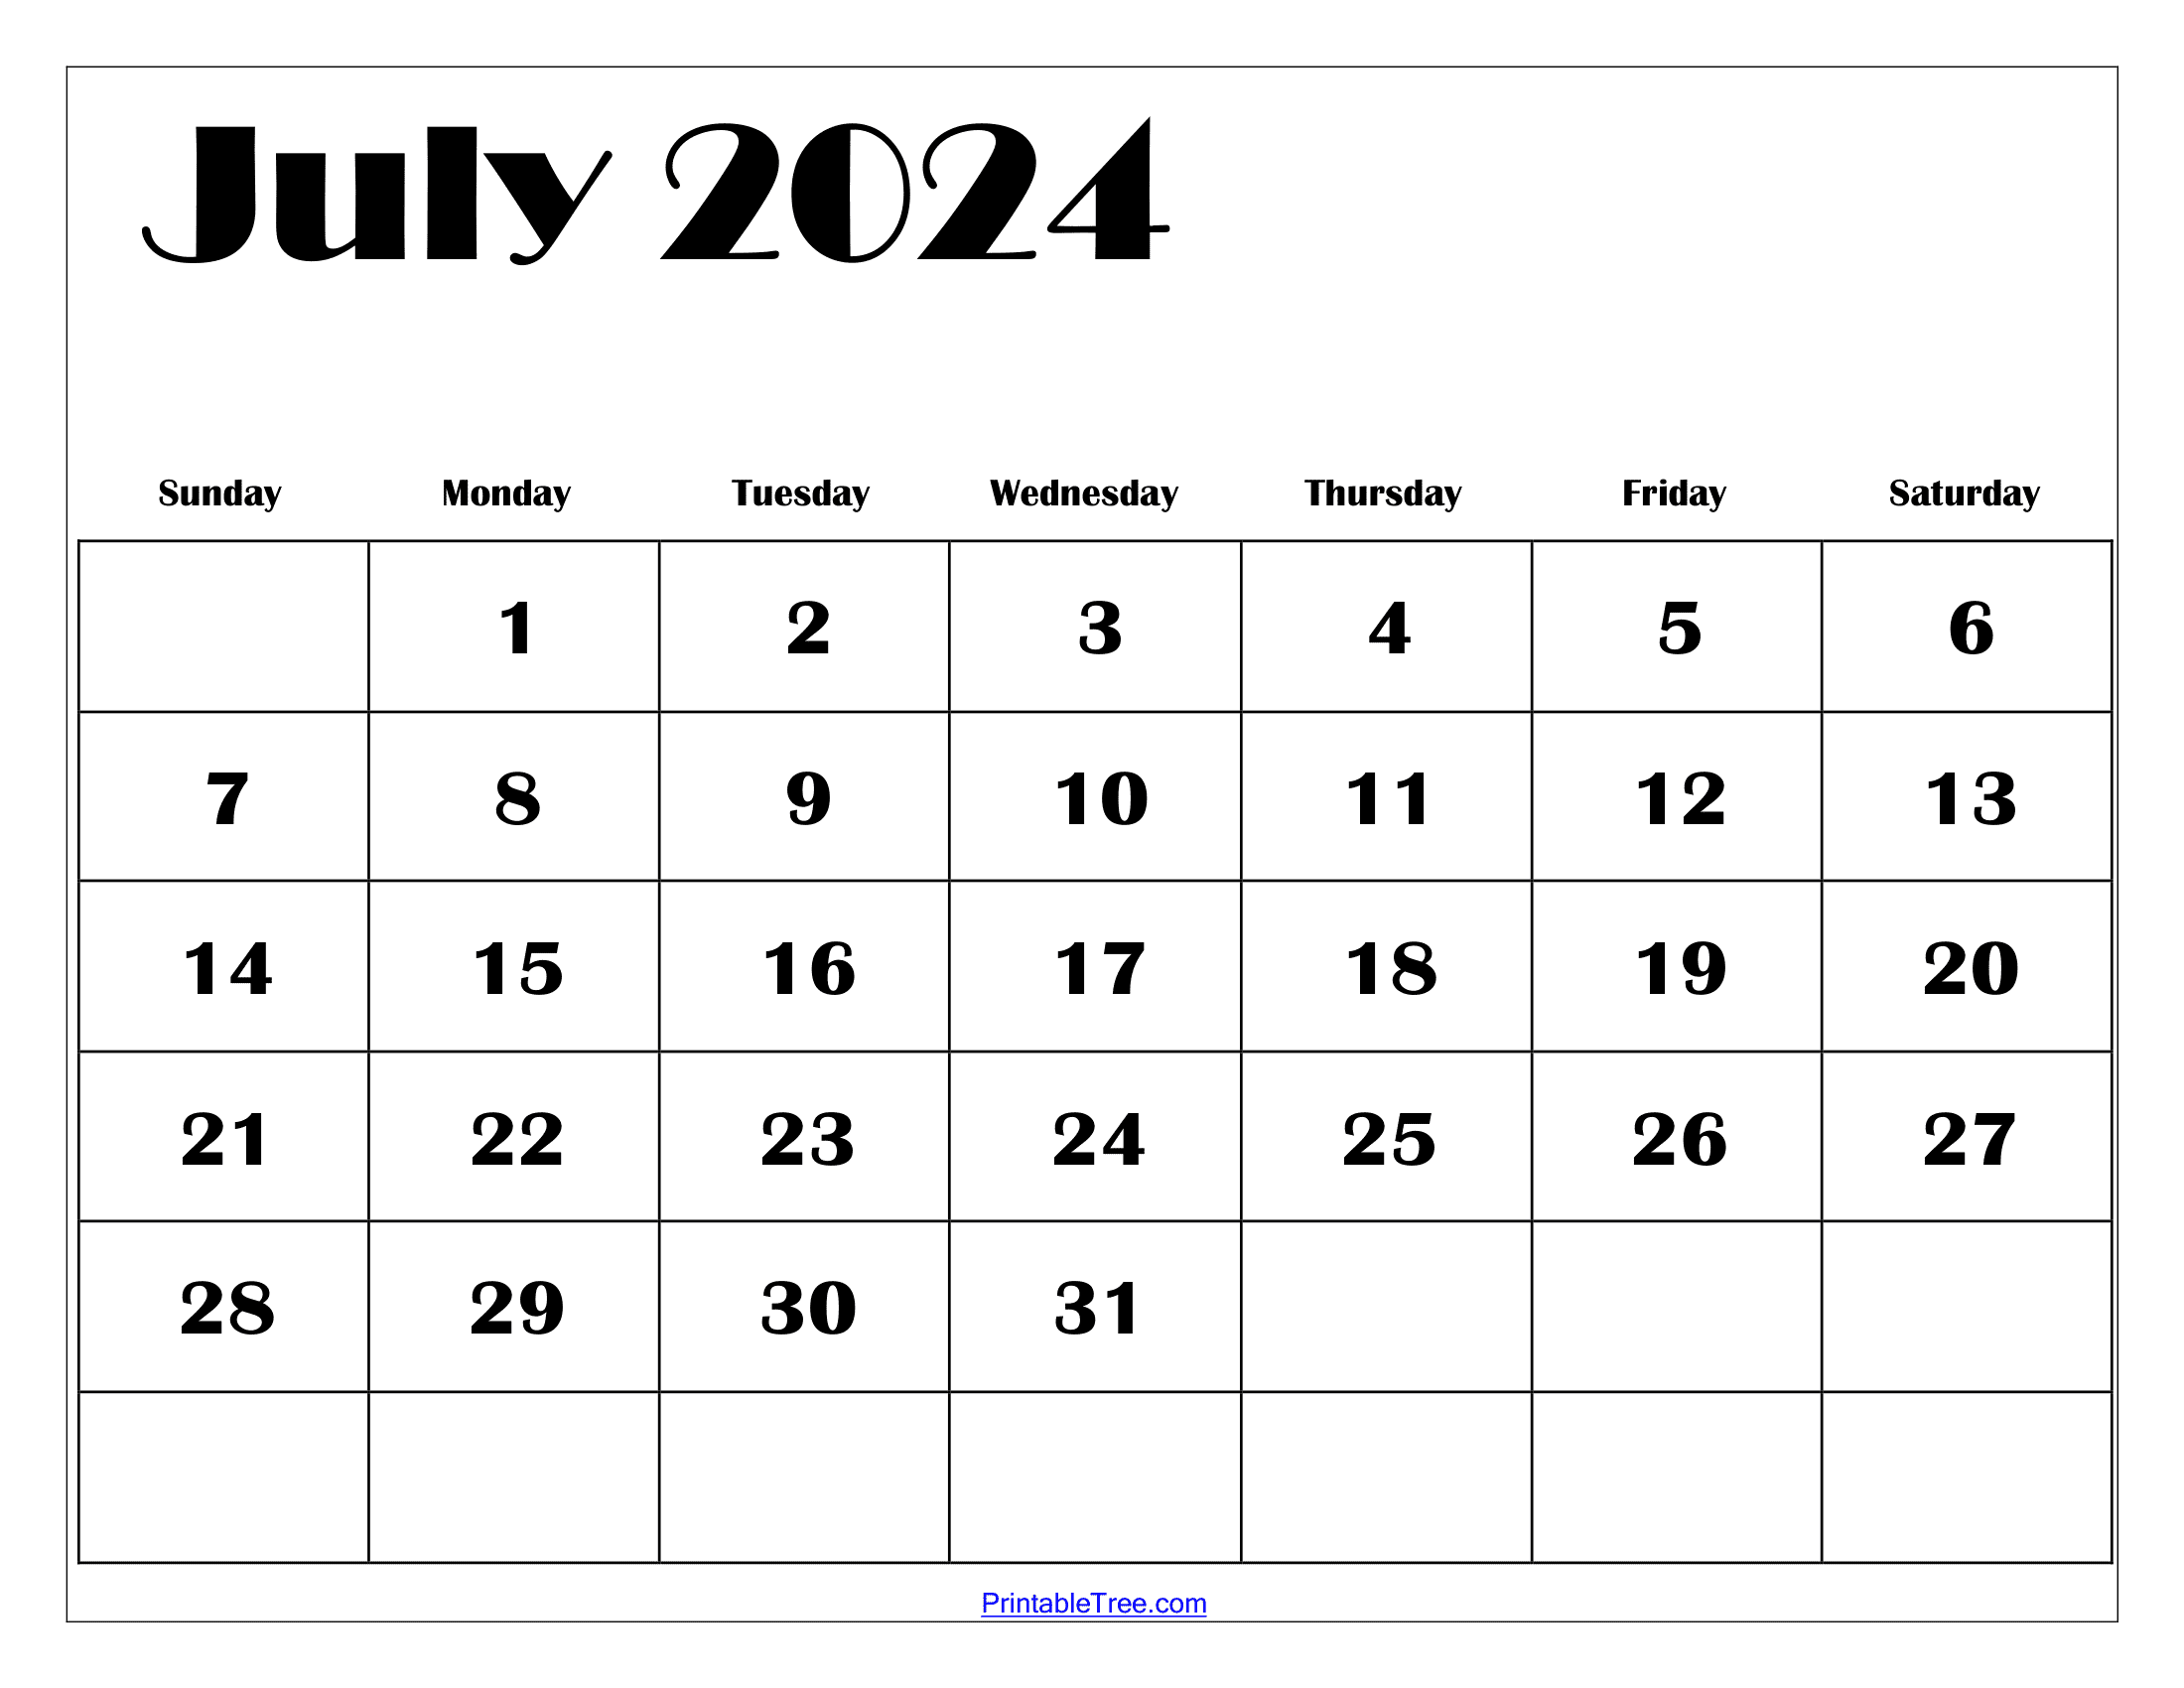 July 2024 Calendar Printable Pdf With Holidays Free Template for July 2024 Calendar Printable